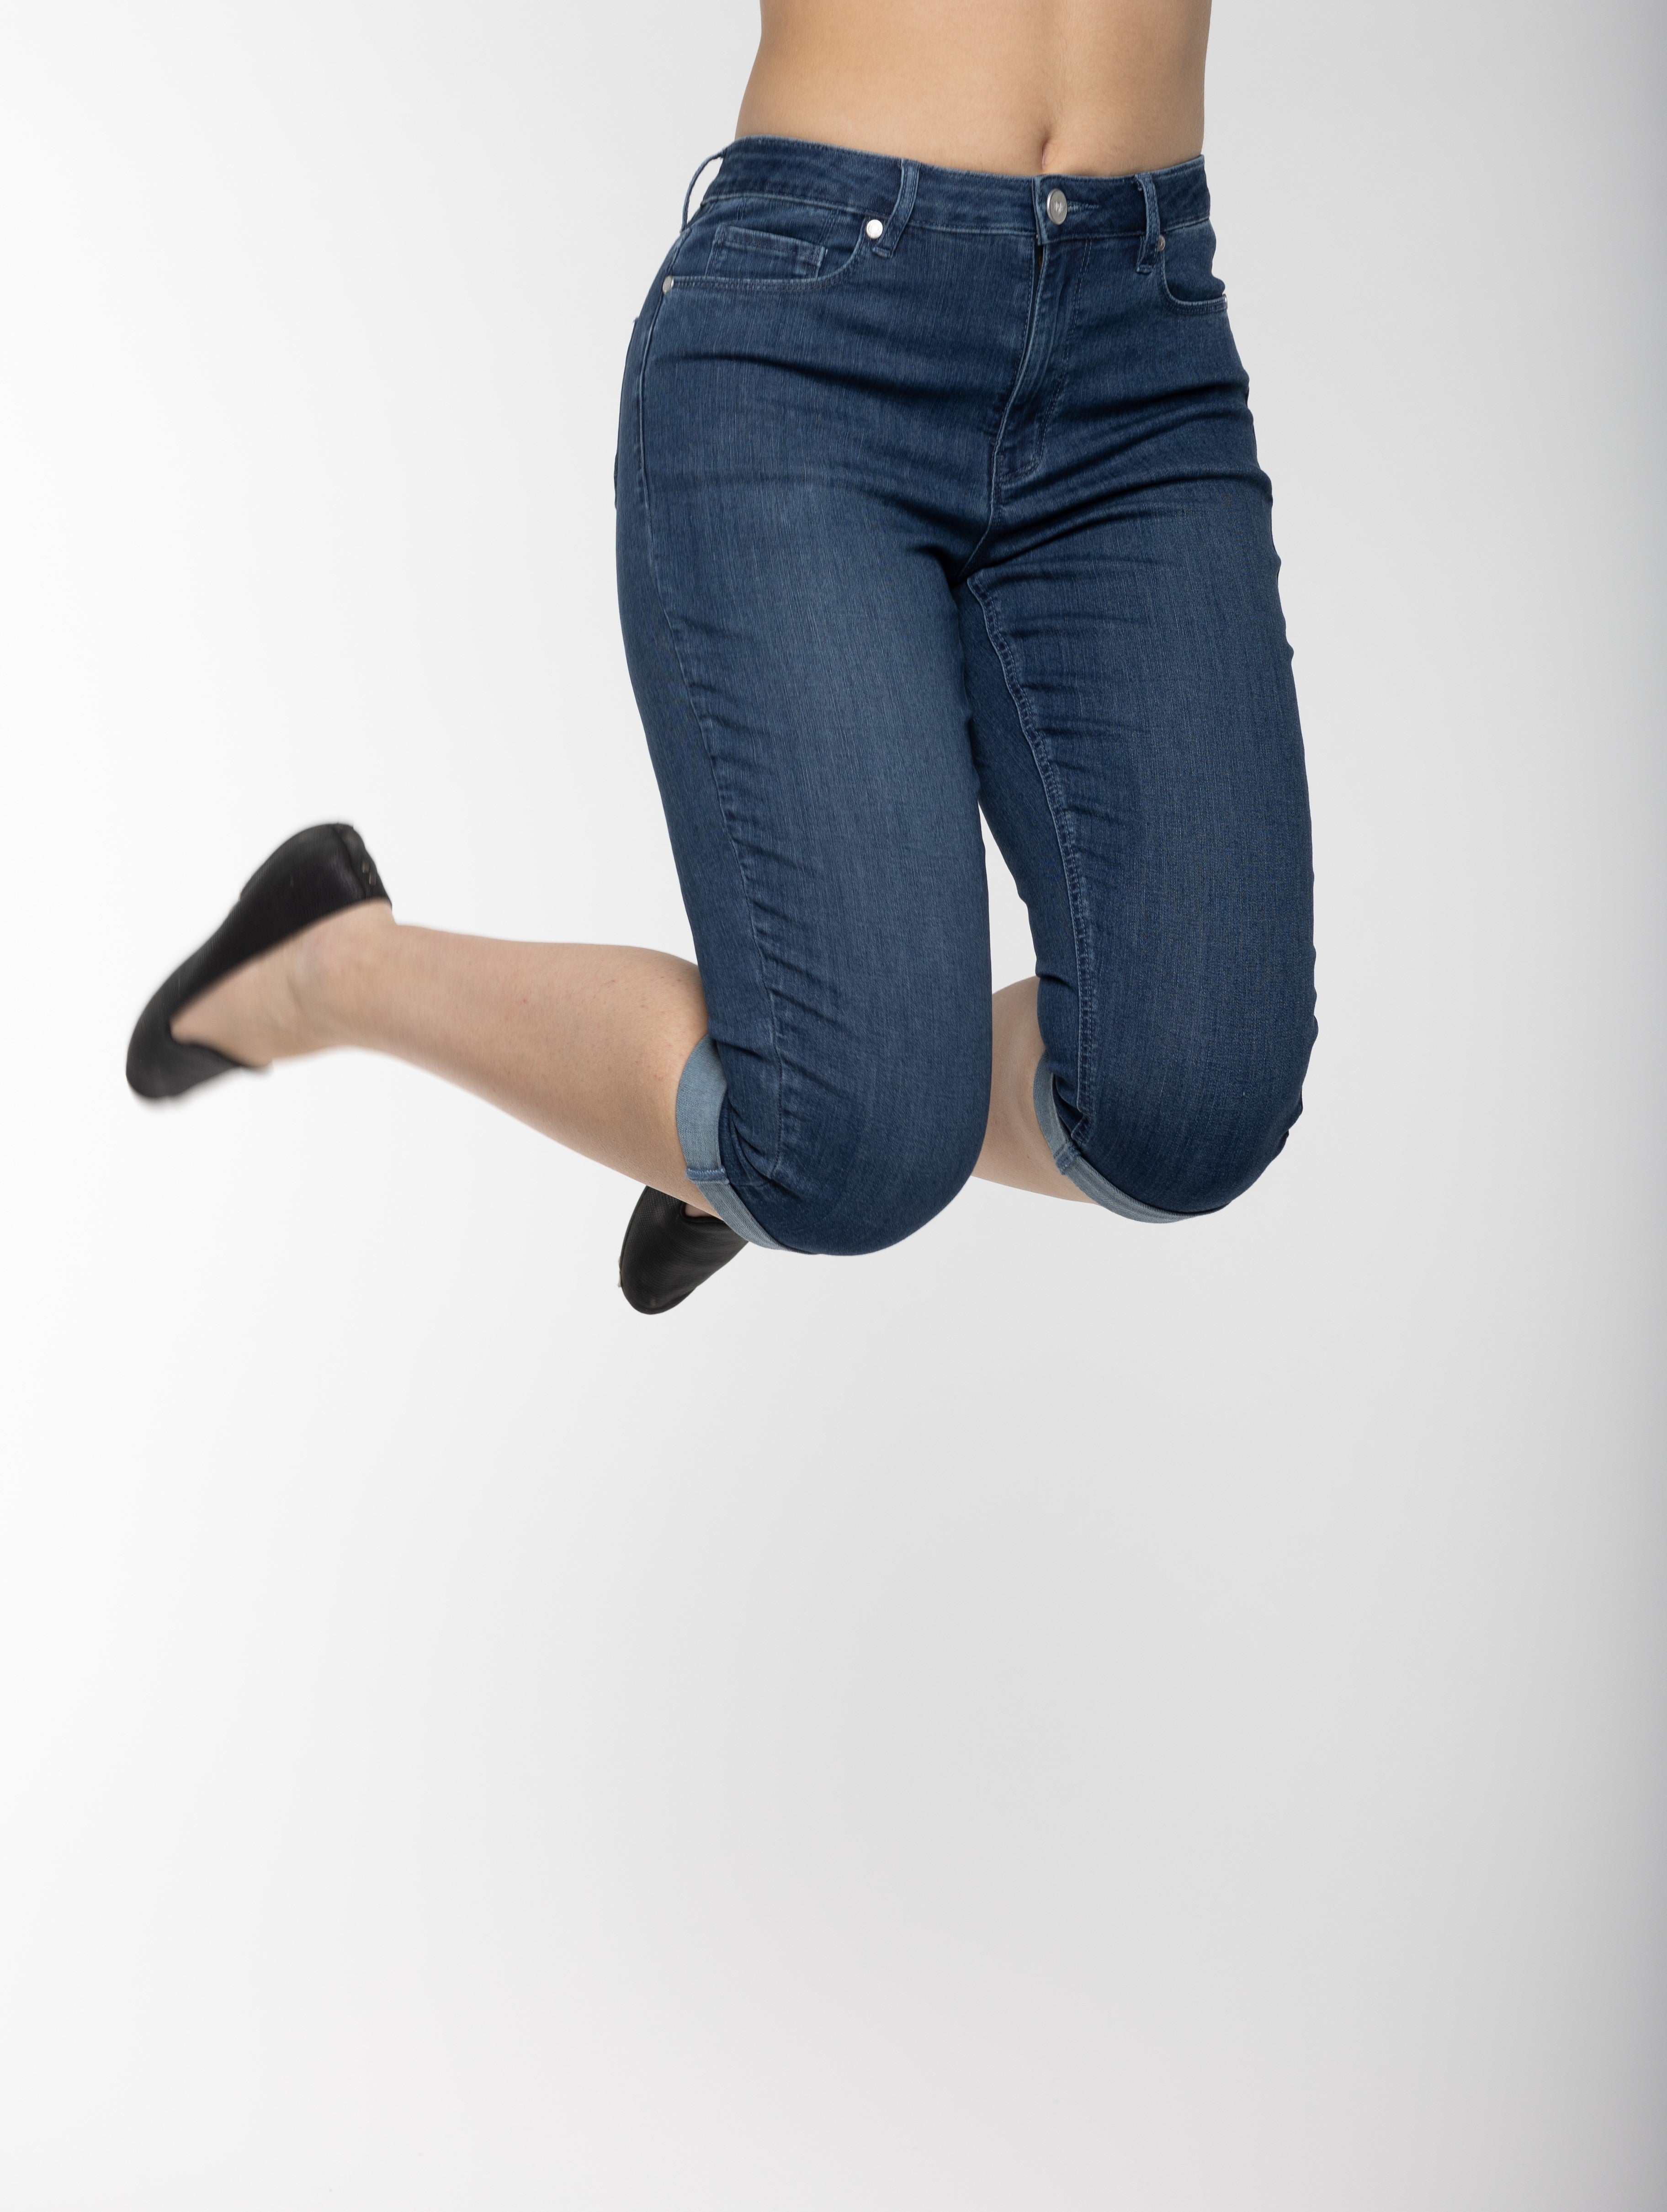 Carreli Jeans®  Premium Angela Fit 5 Pocket Capri in Stone Wash